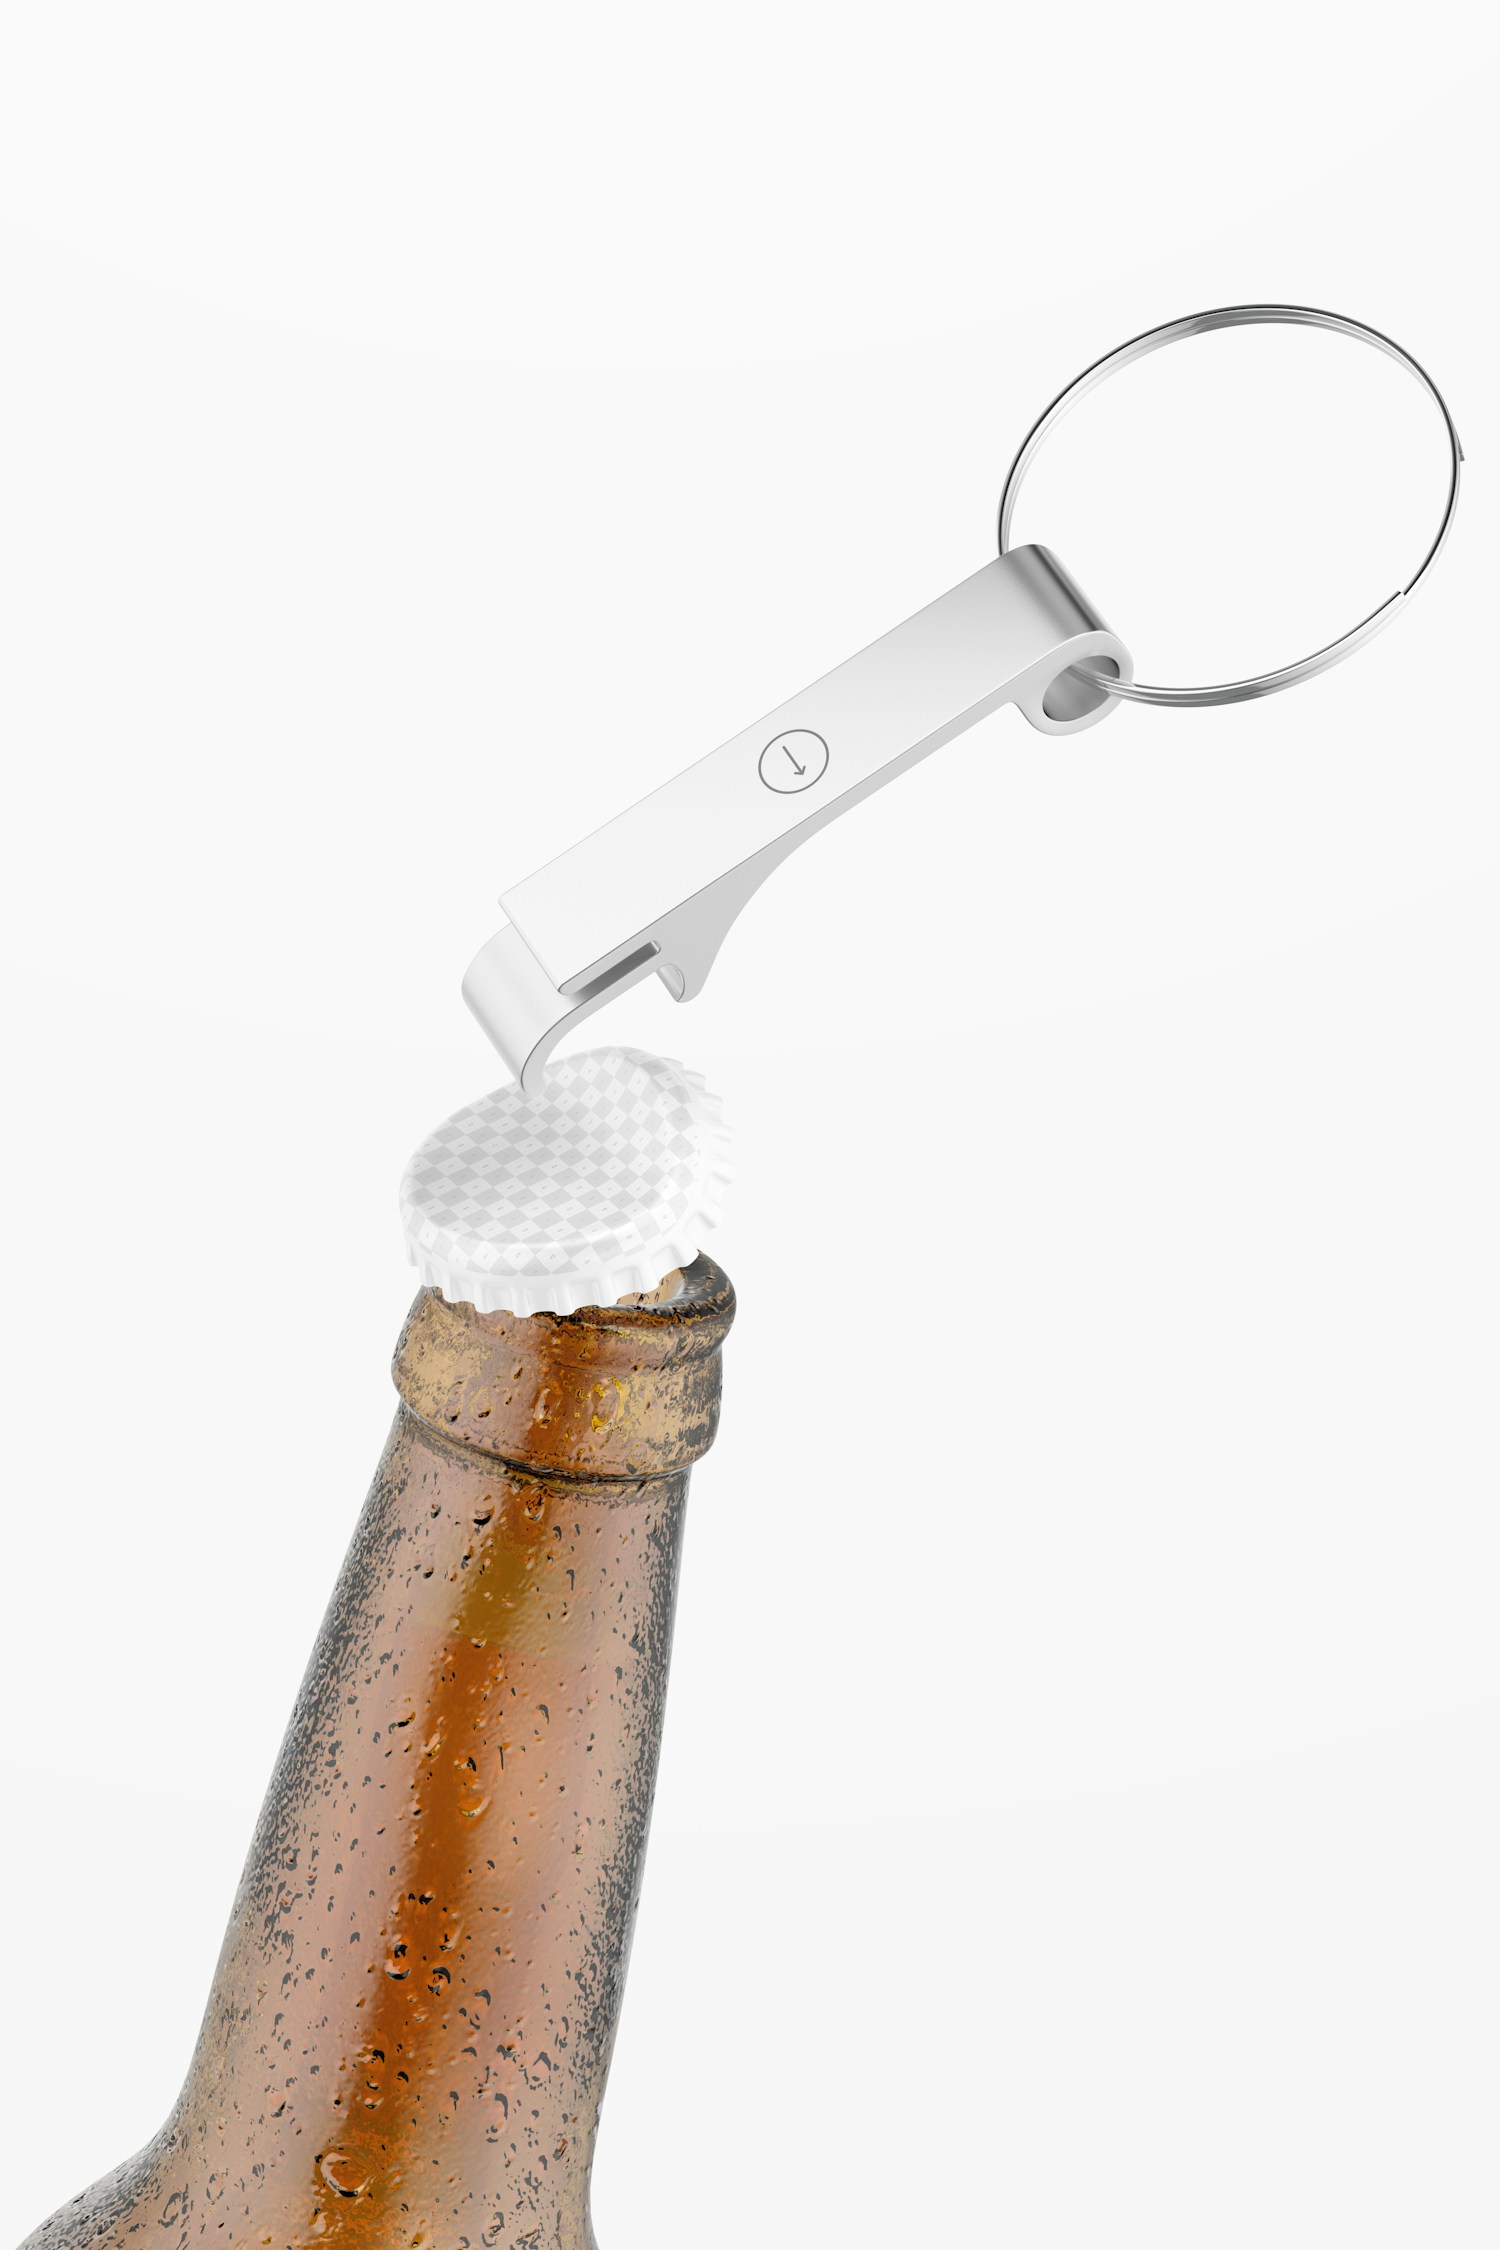 Aluminium Bottle Opener Mockup